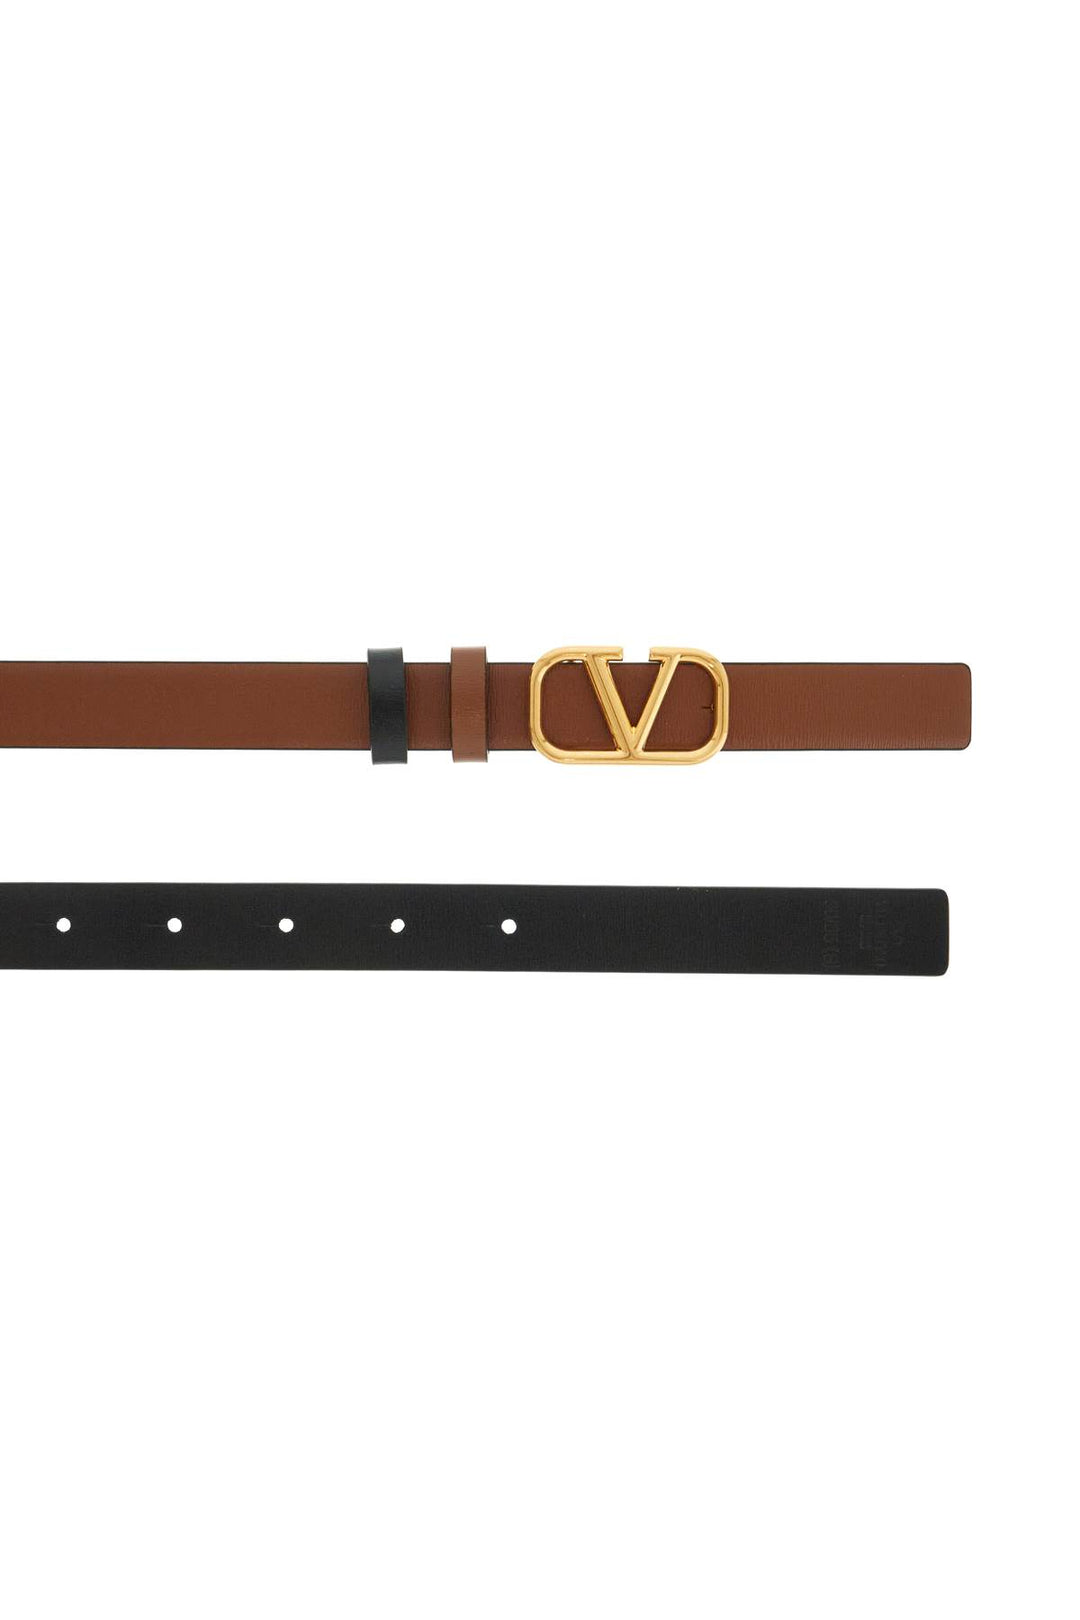 Valentino Garavani Reversible Vlogo Signature Leather Belt   Brown